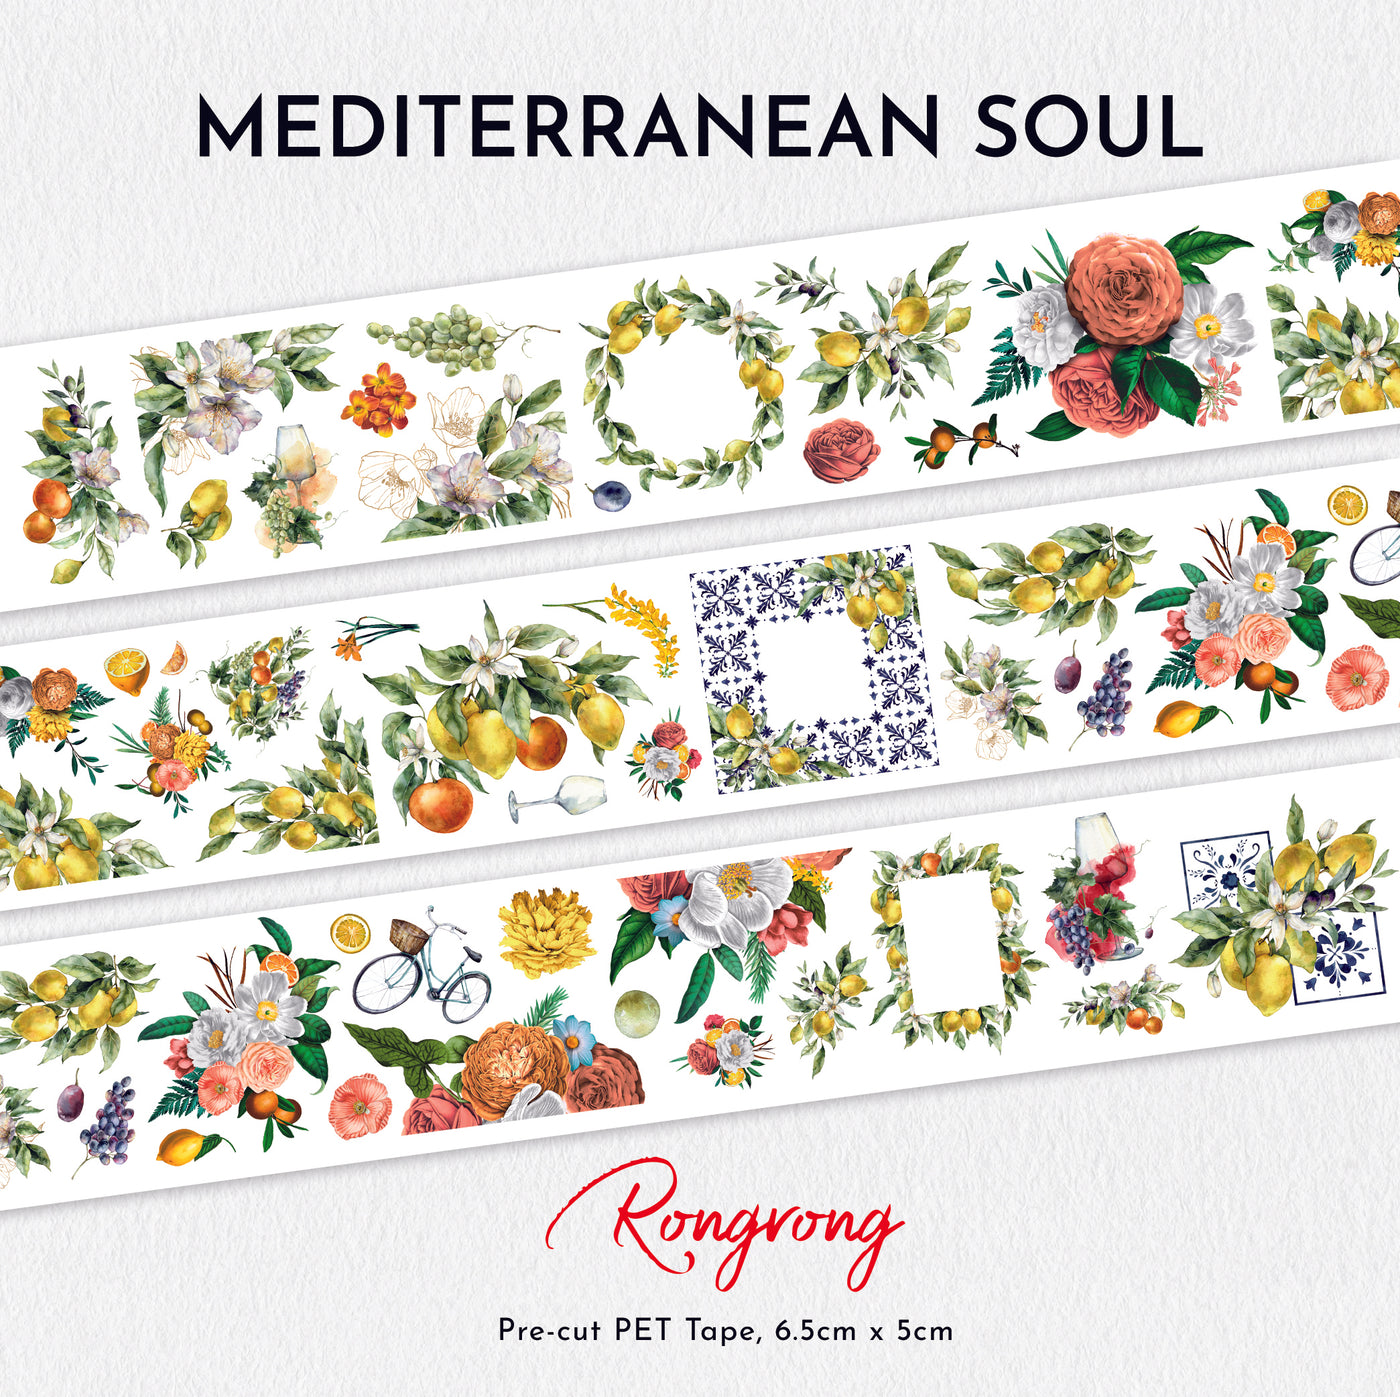 Shop Rongrong Mediterranean Soul PET Tape for planner